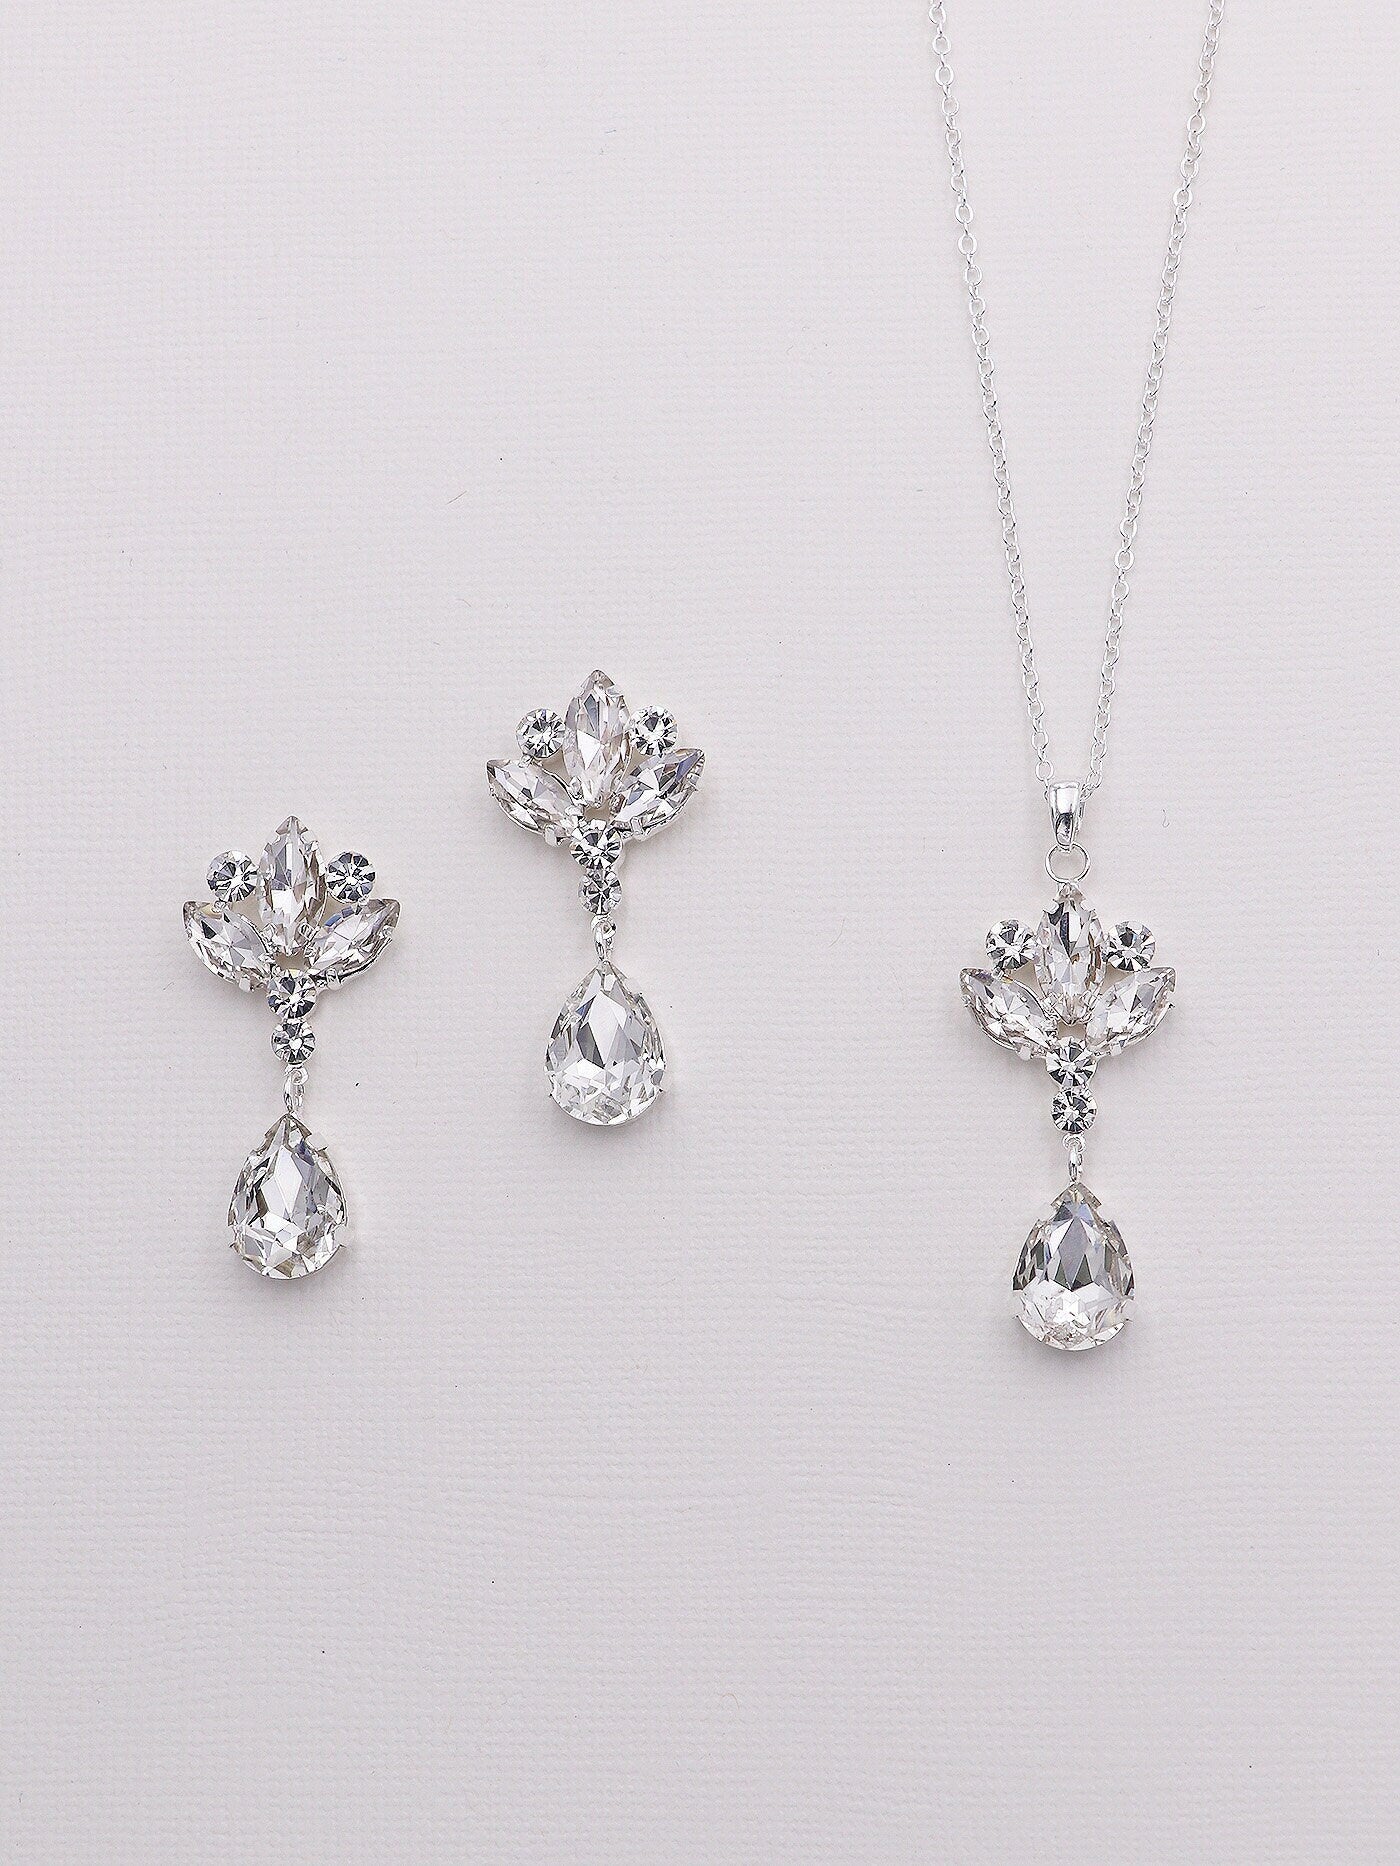 Belle Crystal Jewelry Set